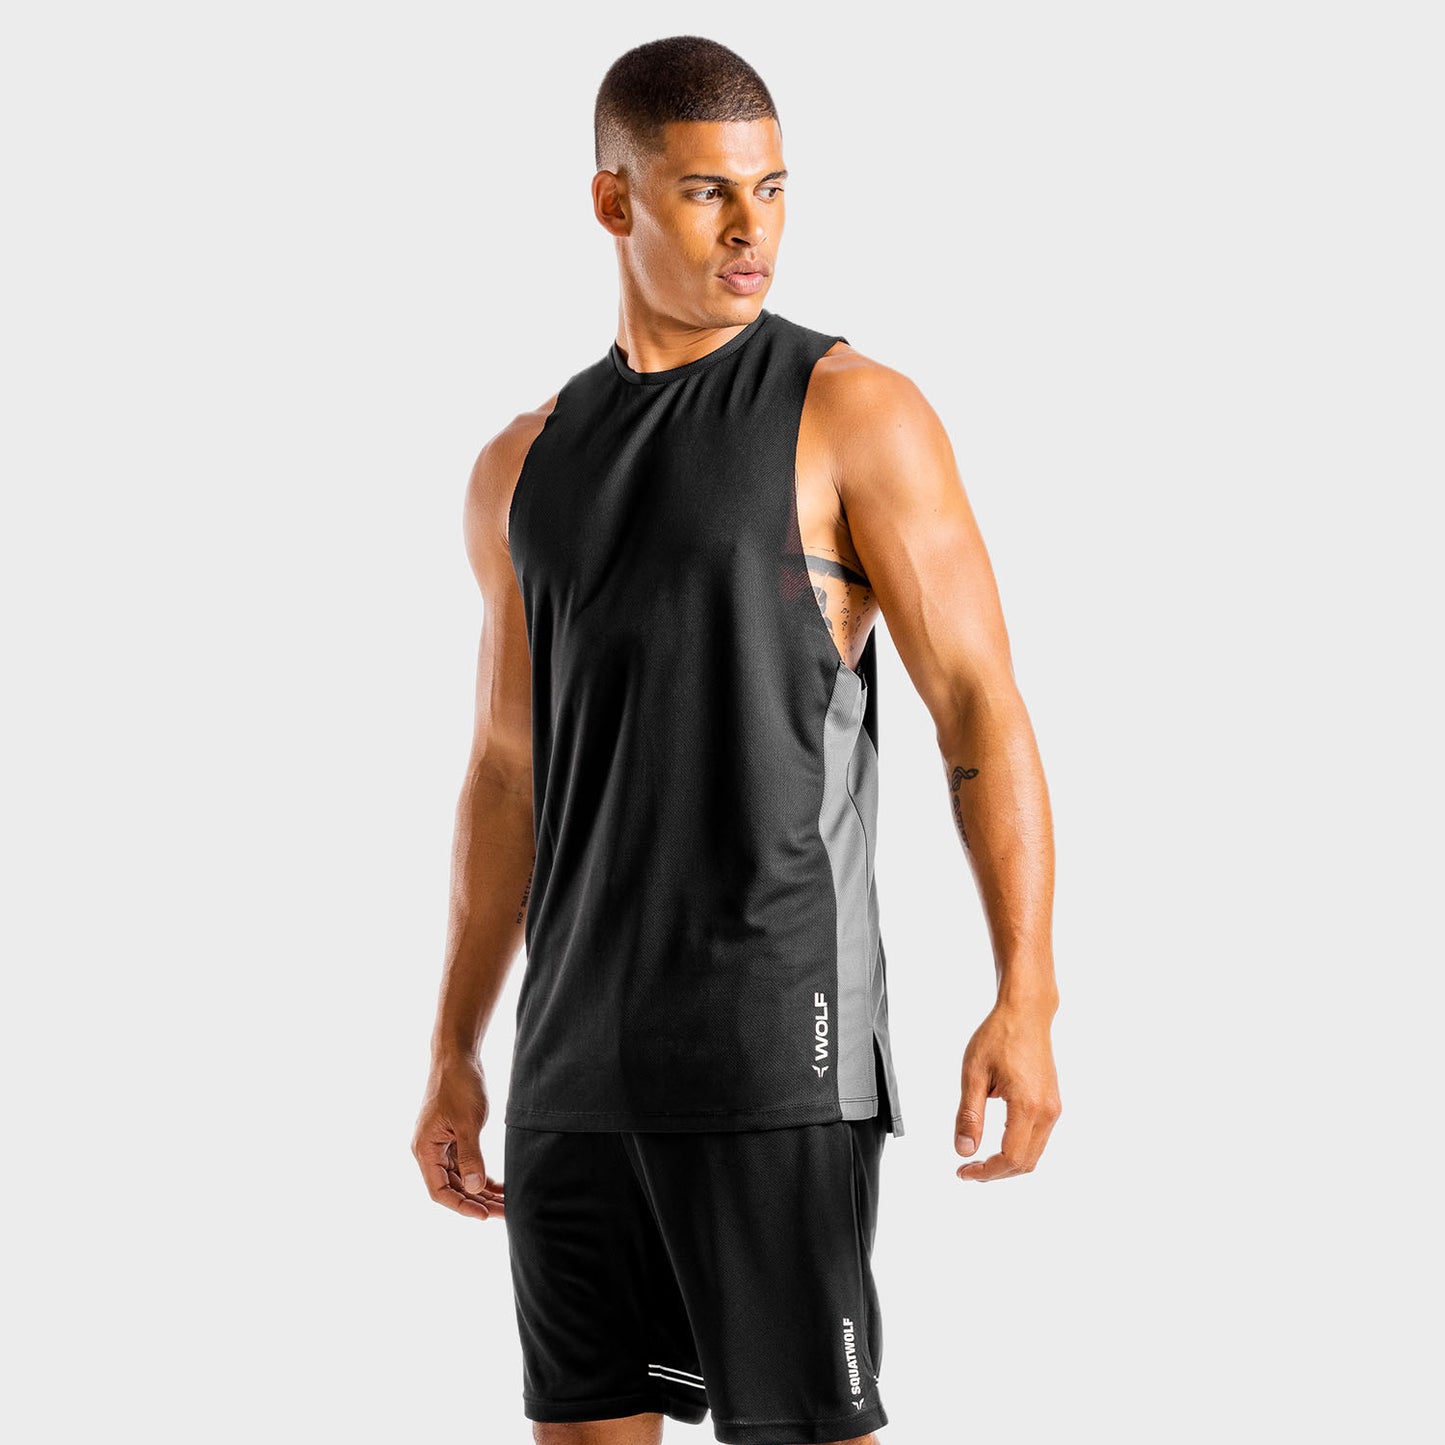 squatwolf-workout-tank-tops-for-men-flux-basketball-tank-black-gym-wear